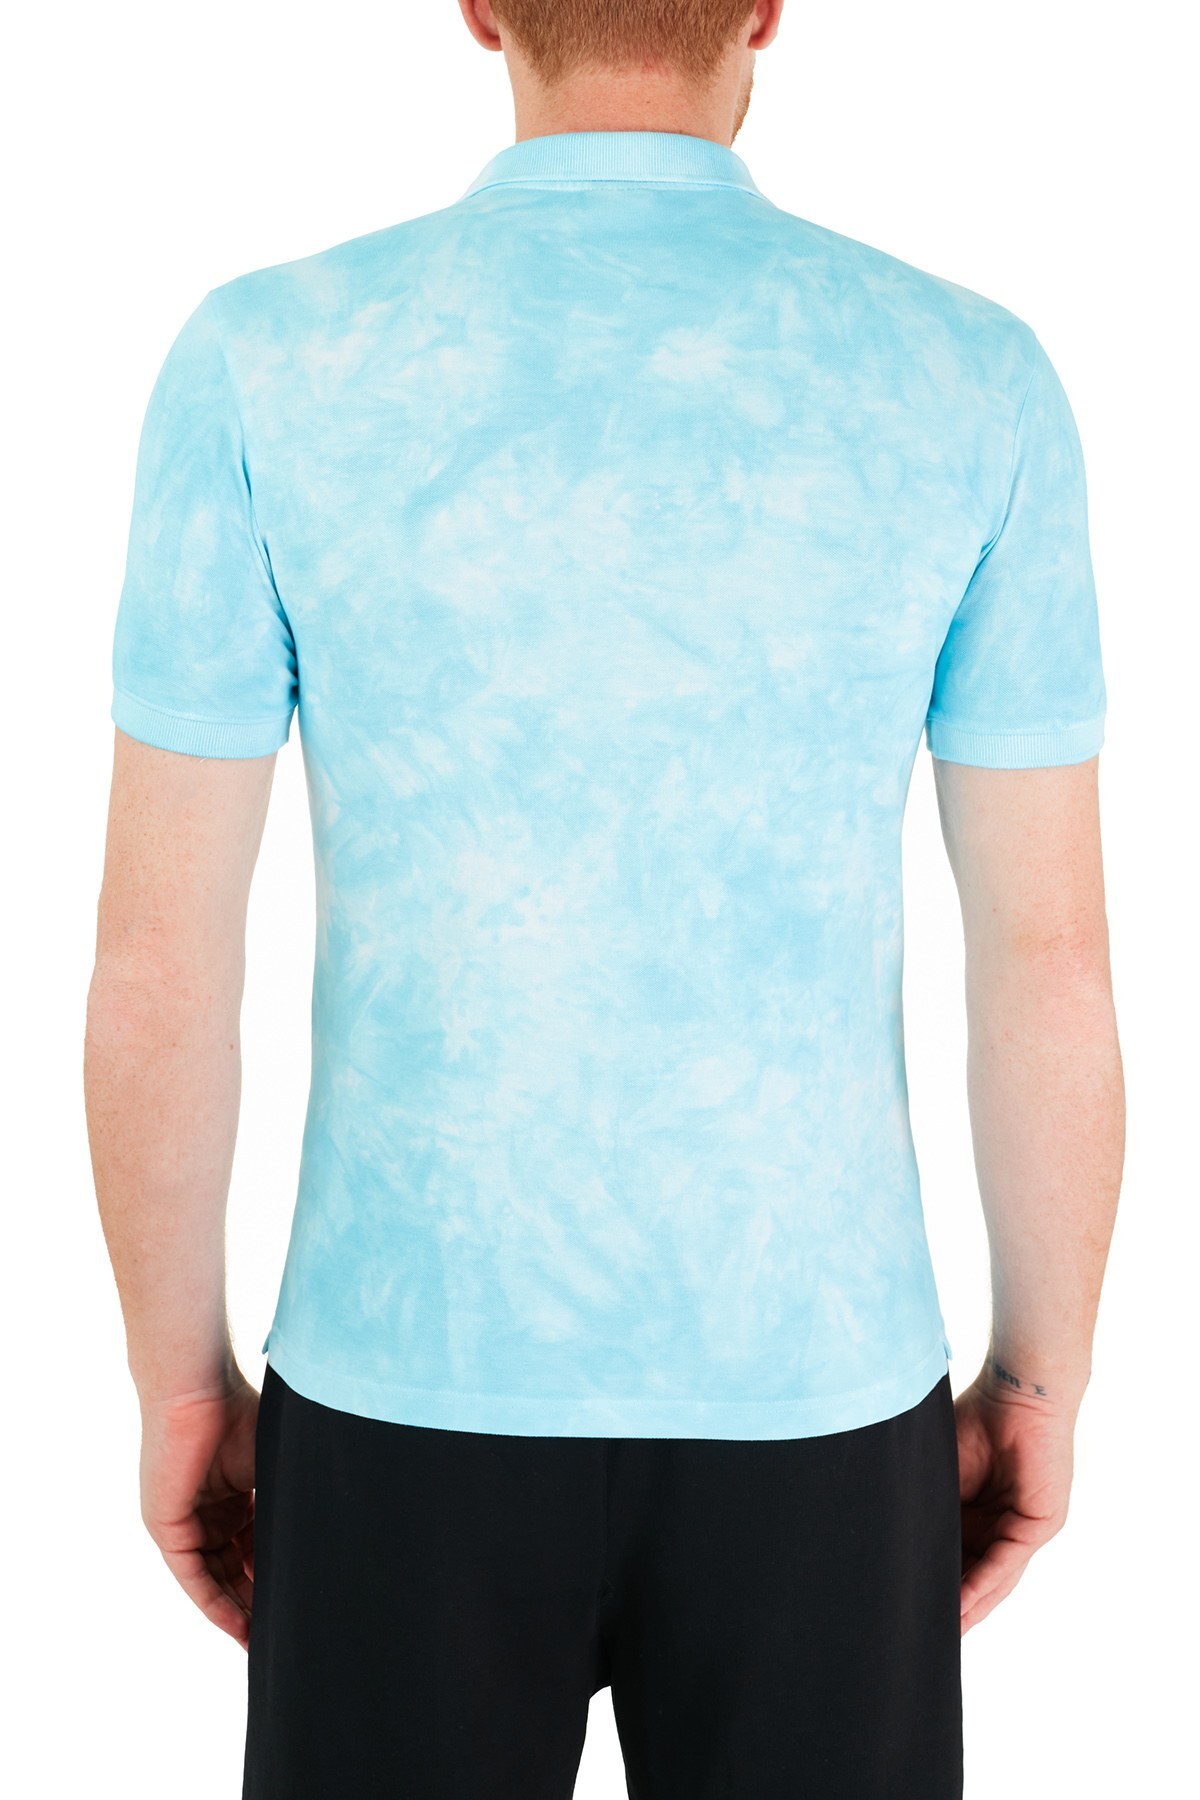 Ruck Maul Pamuklu Düğmeli T Shirt Erkek Polo RMM01000725 MAVİ